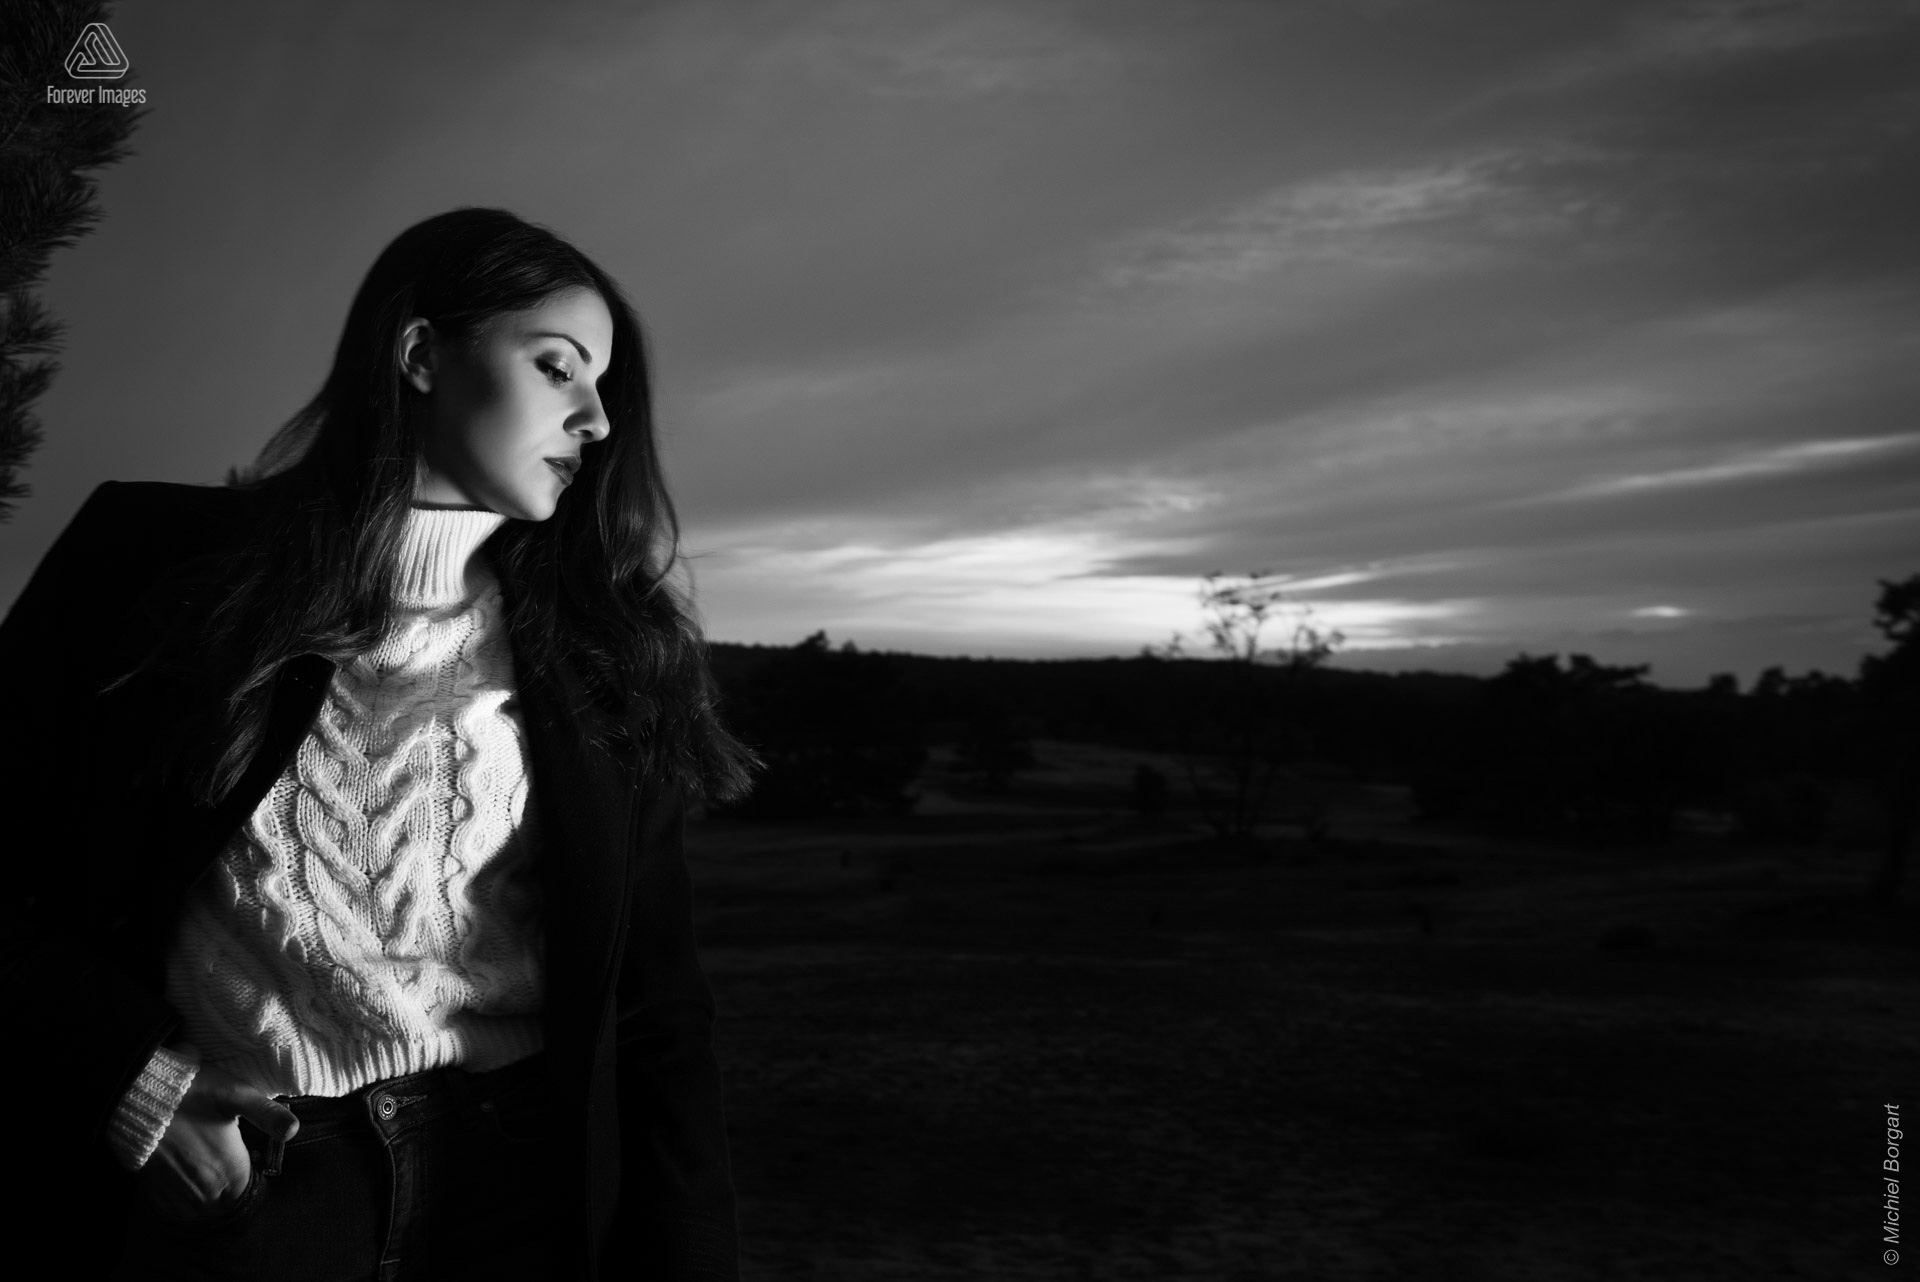 Portretfoto dame zwart-wit opzij kijkend zonsondergang | Vanessa Paniccia Veluwezoom | Portretfotograaf Michiel Borgart - Forever Images.